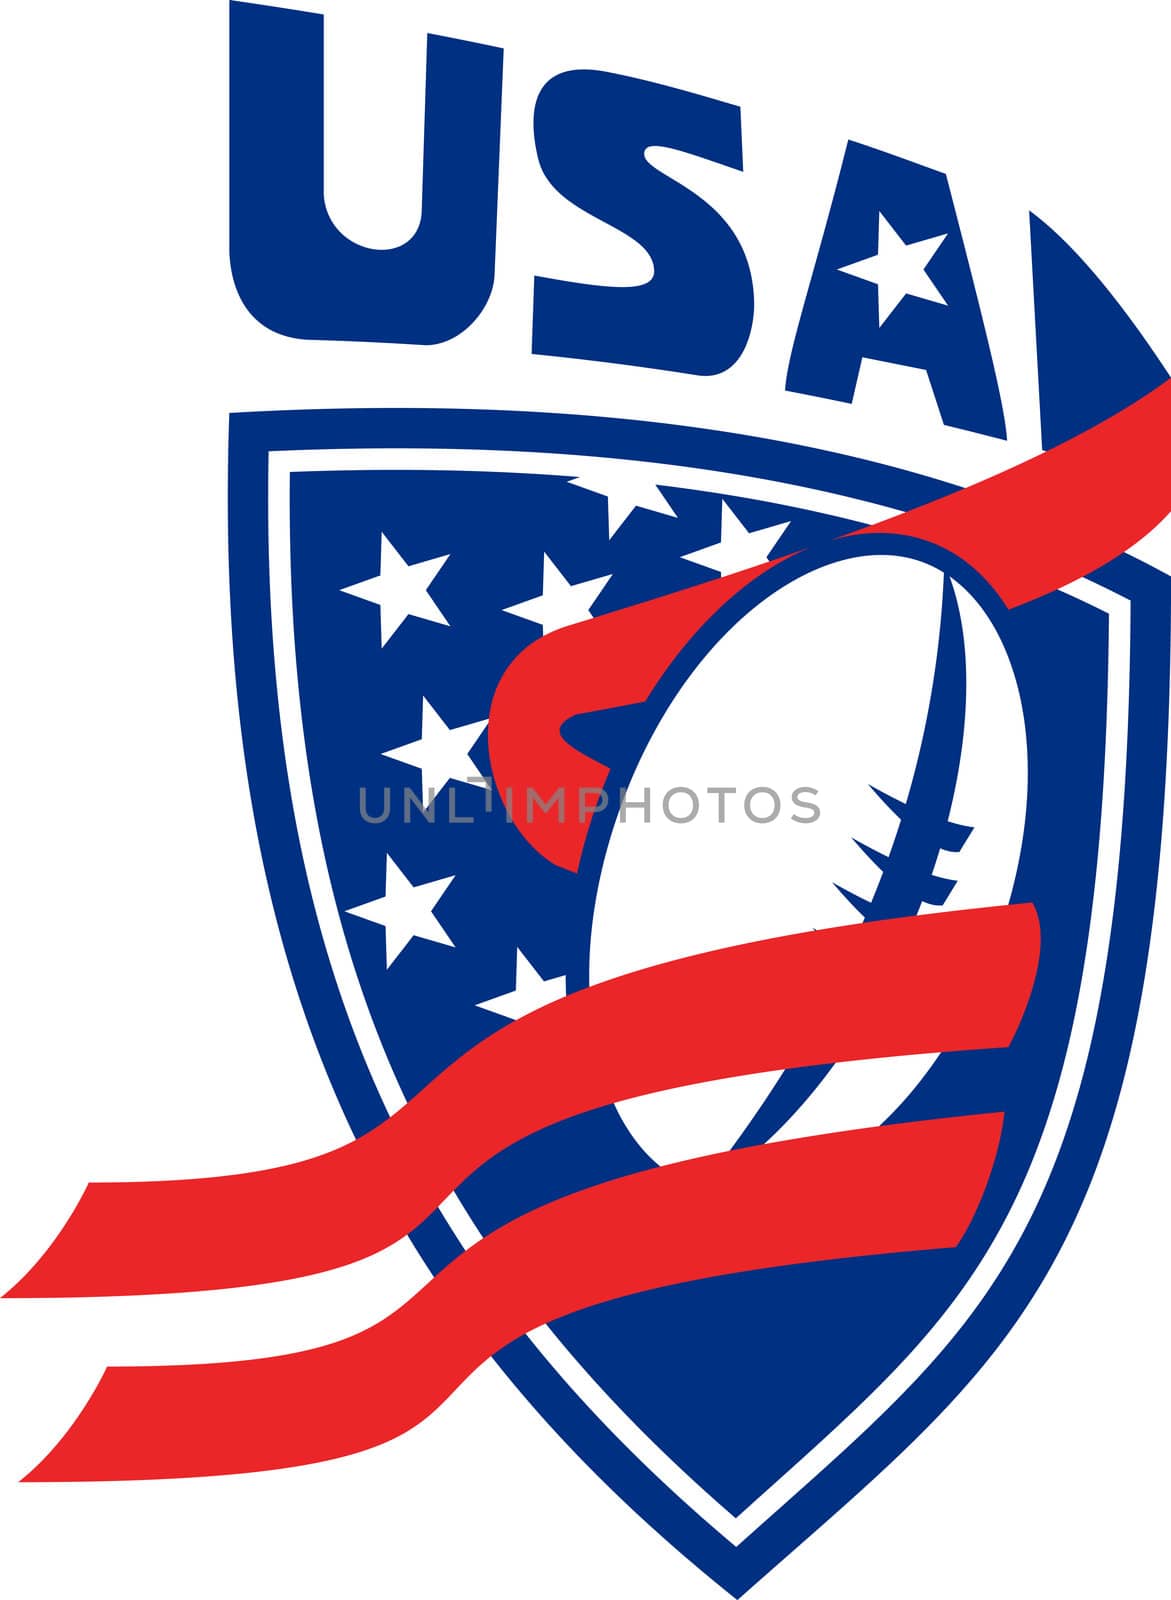 USA American Rugby Ball Shield by patrimonio